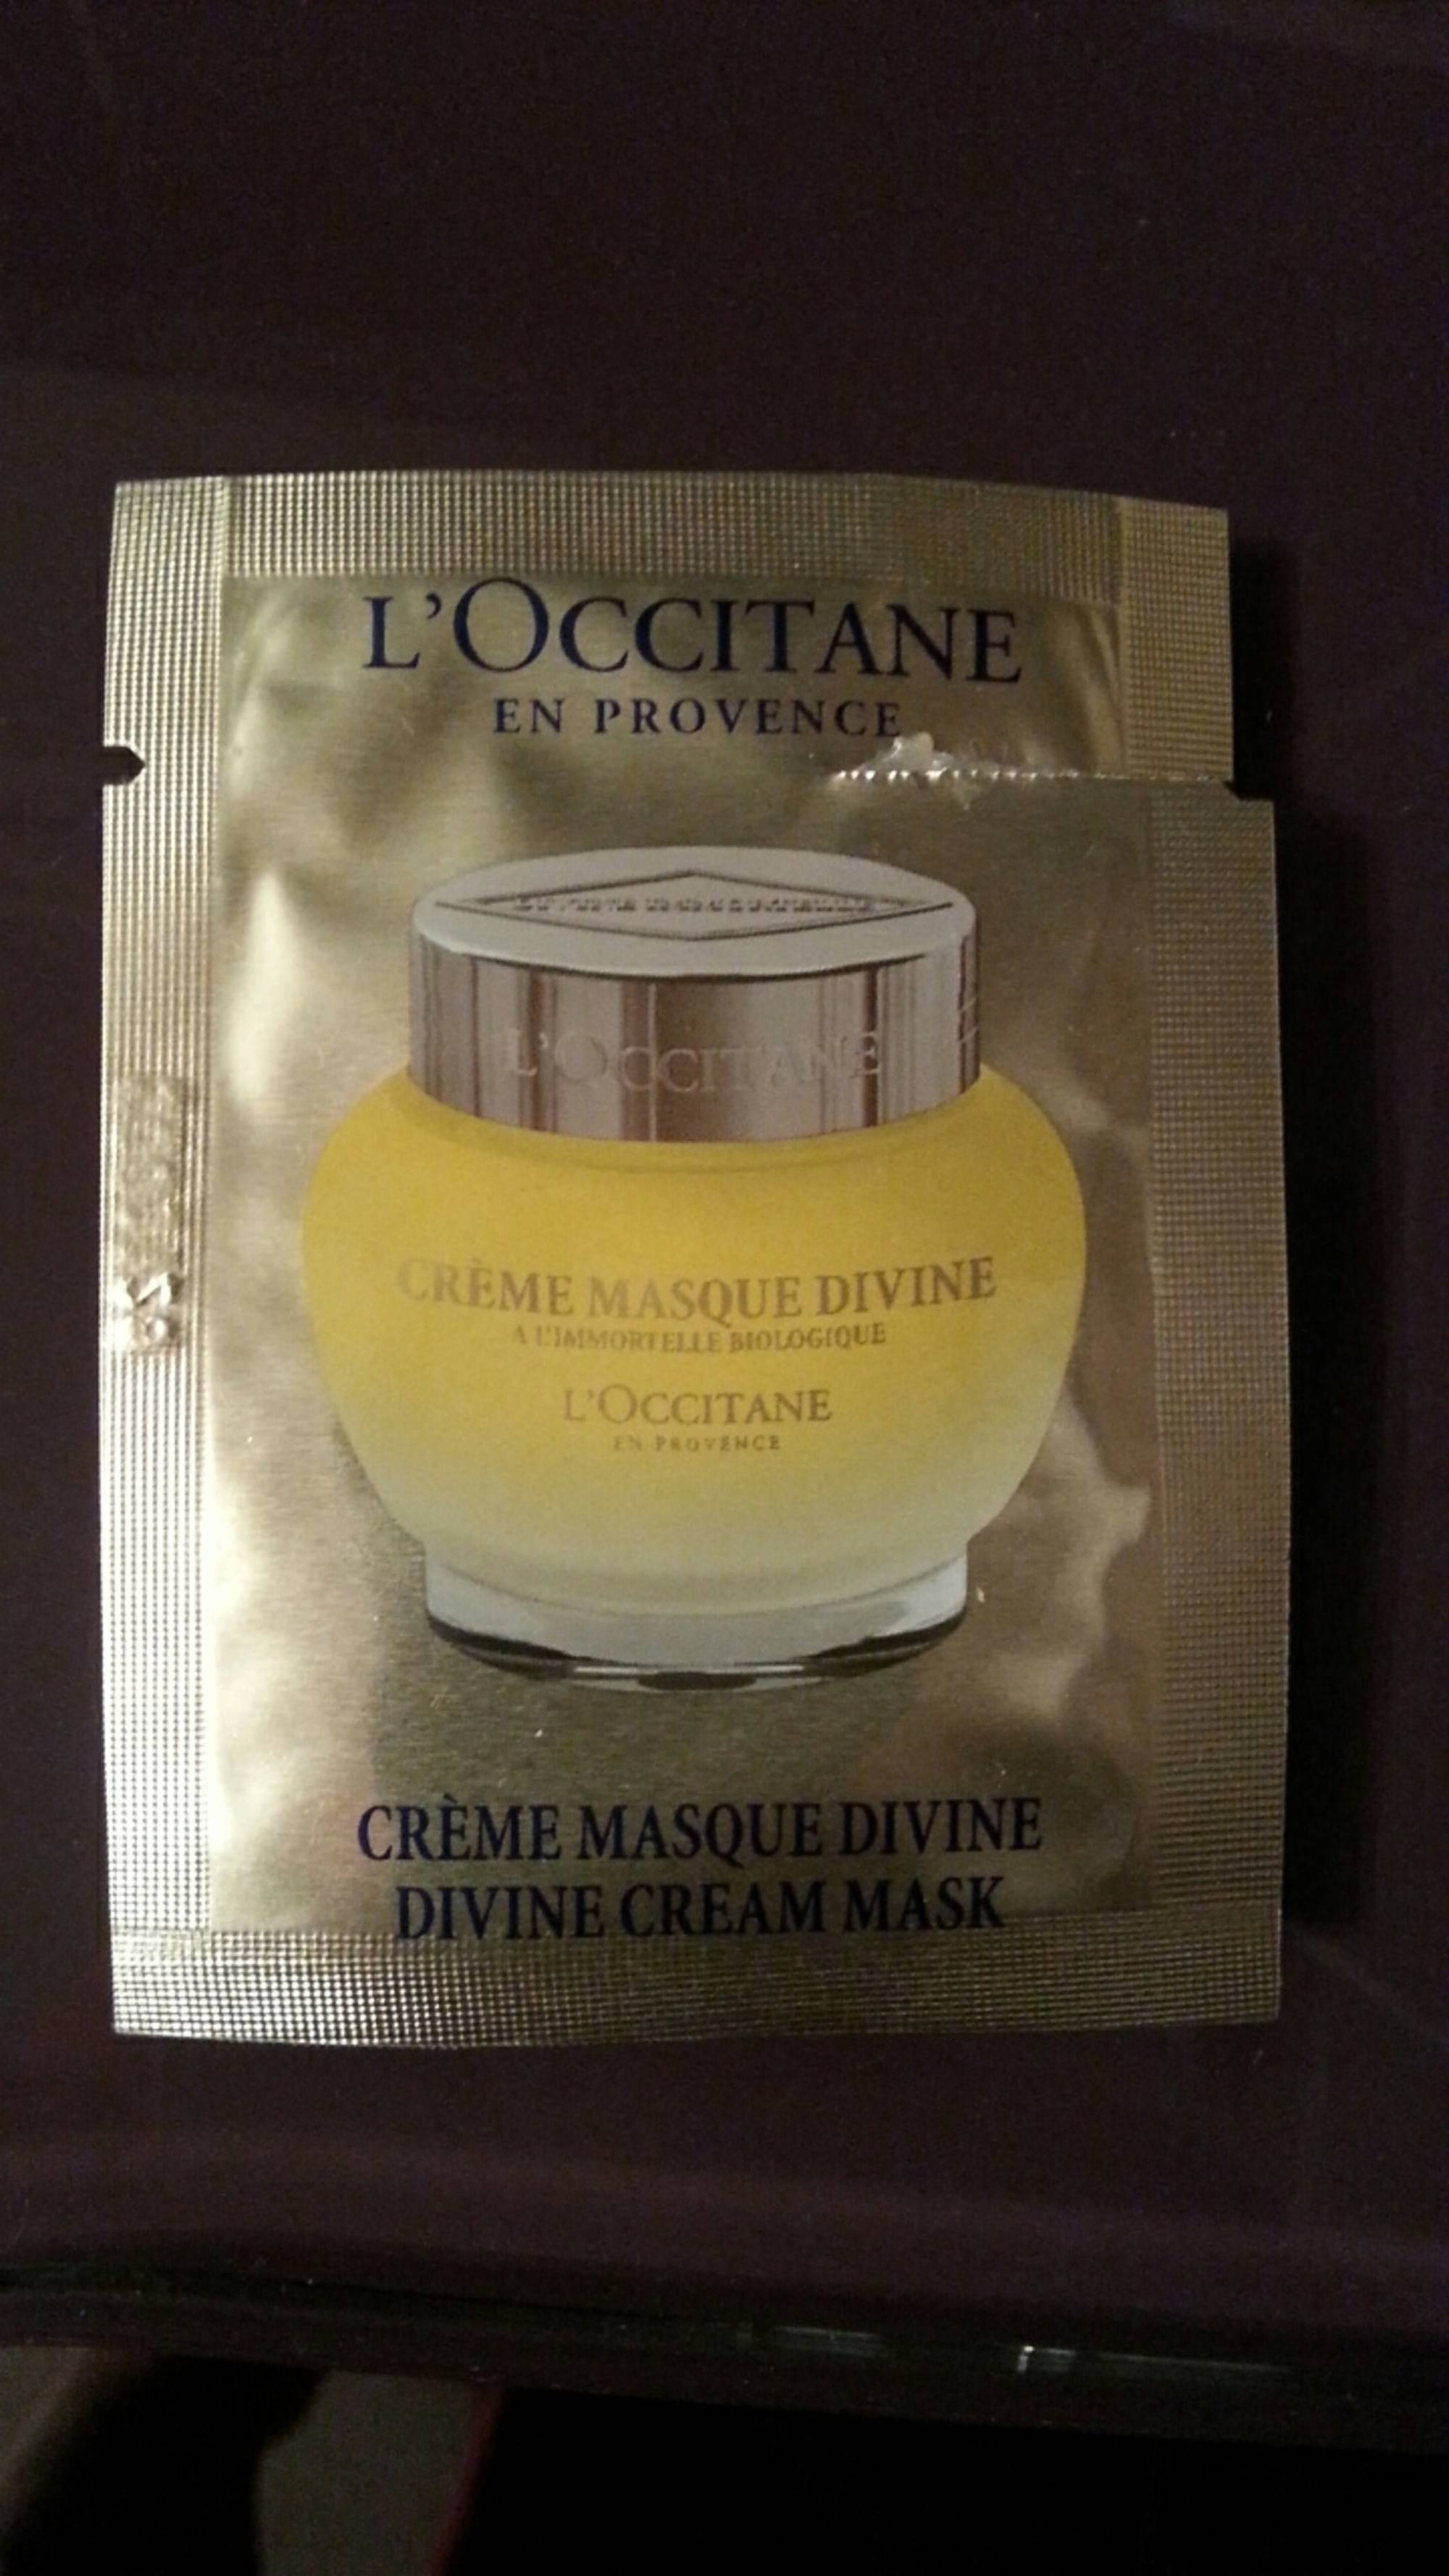 L'OCCITANE - Crème masque divine